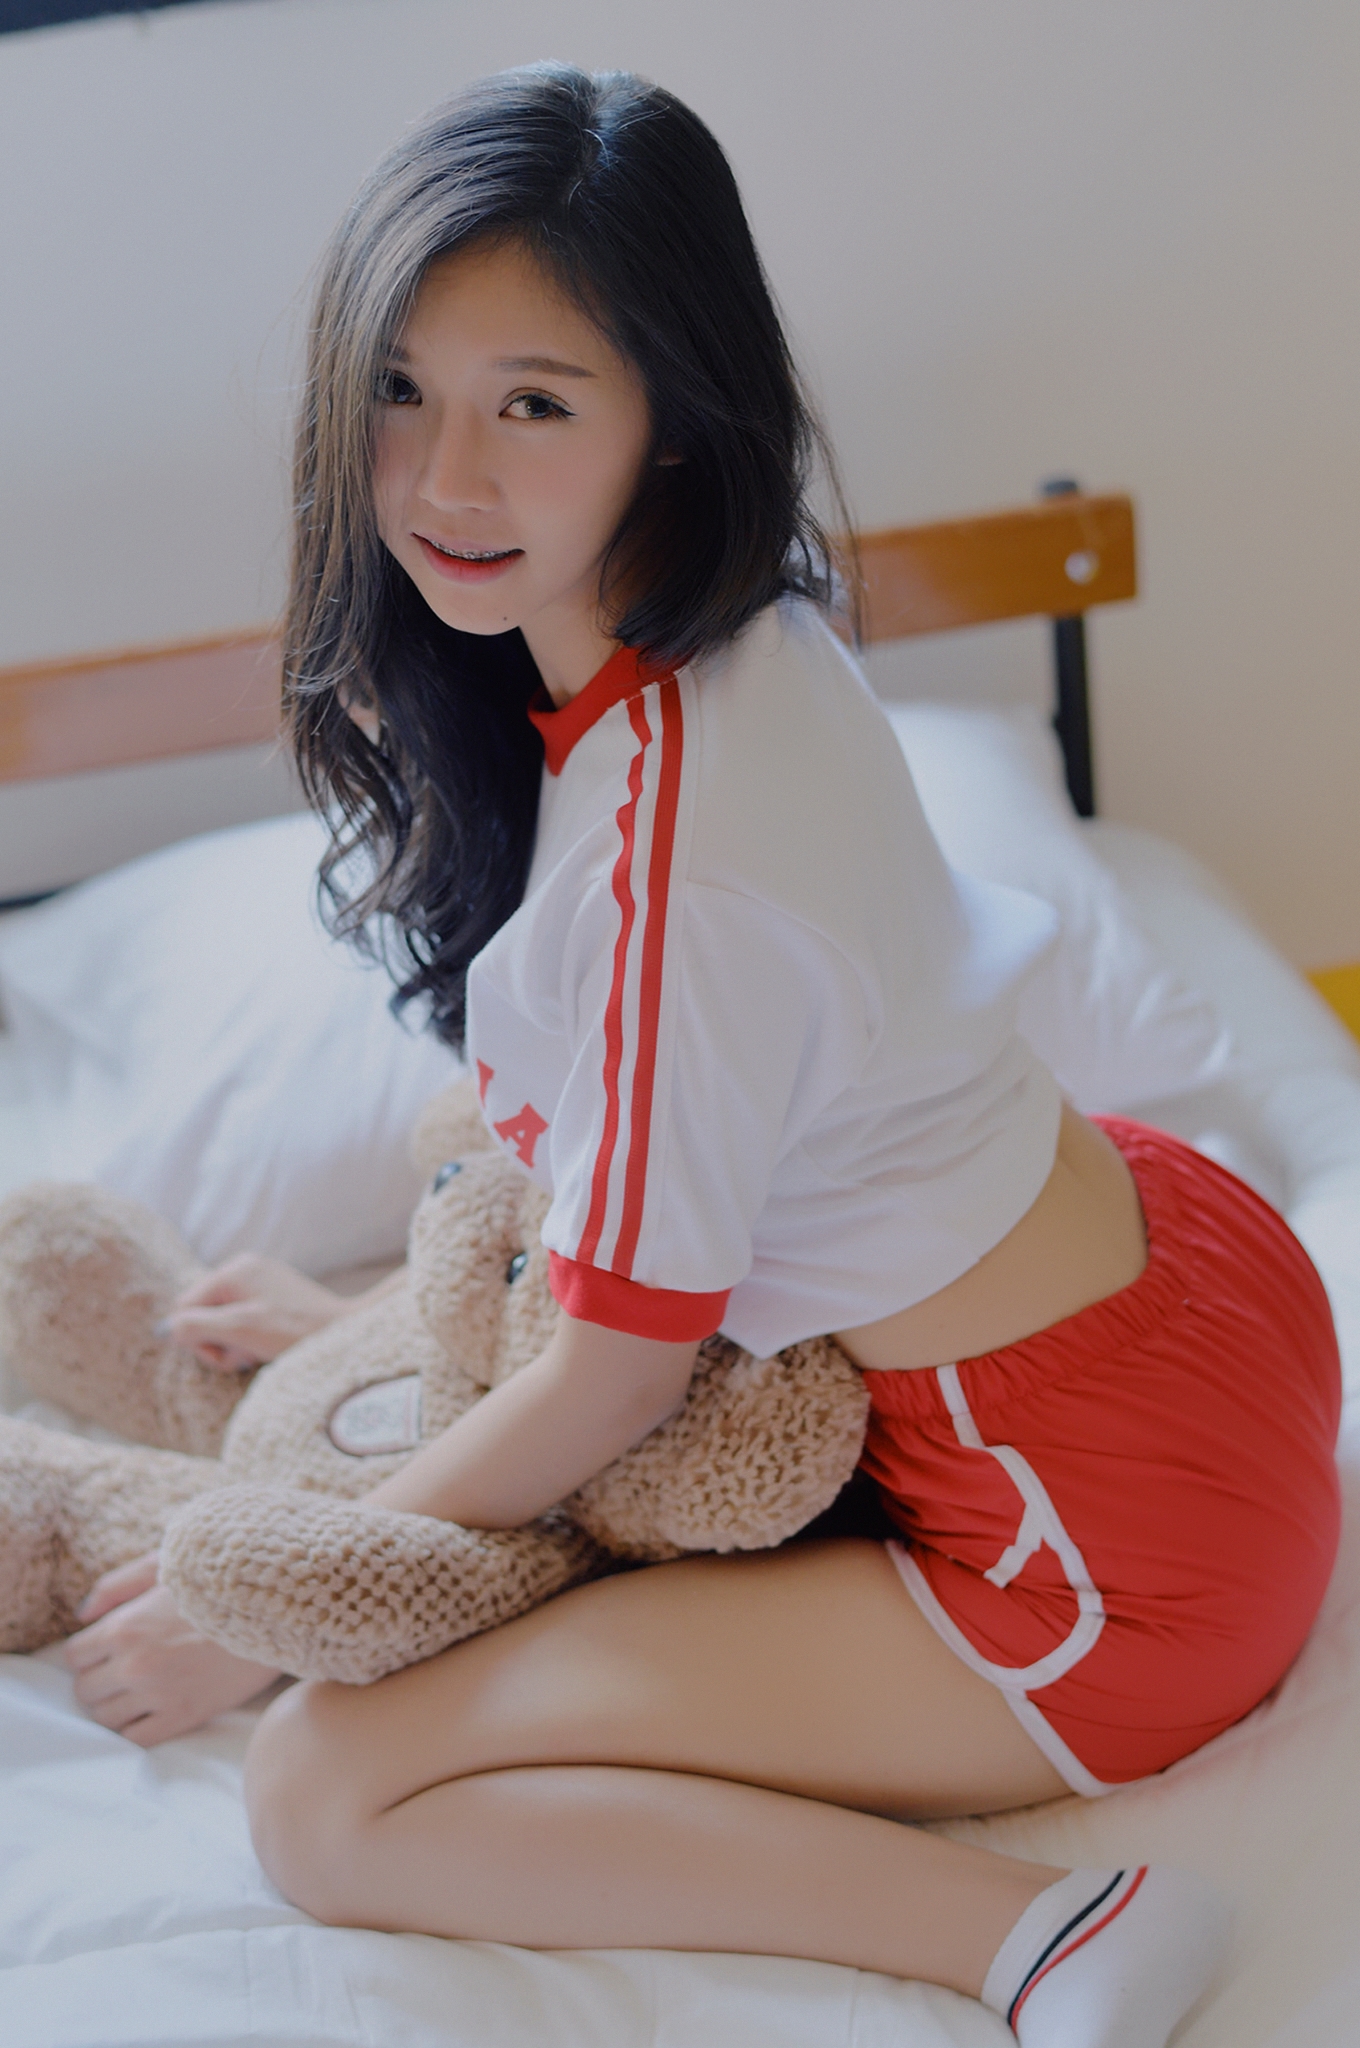 Asian Women Model Brunette Looking At Viewer Smiling Long Hair Braces T Shirt Socks Teddy Bears In B 1360x2048